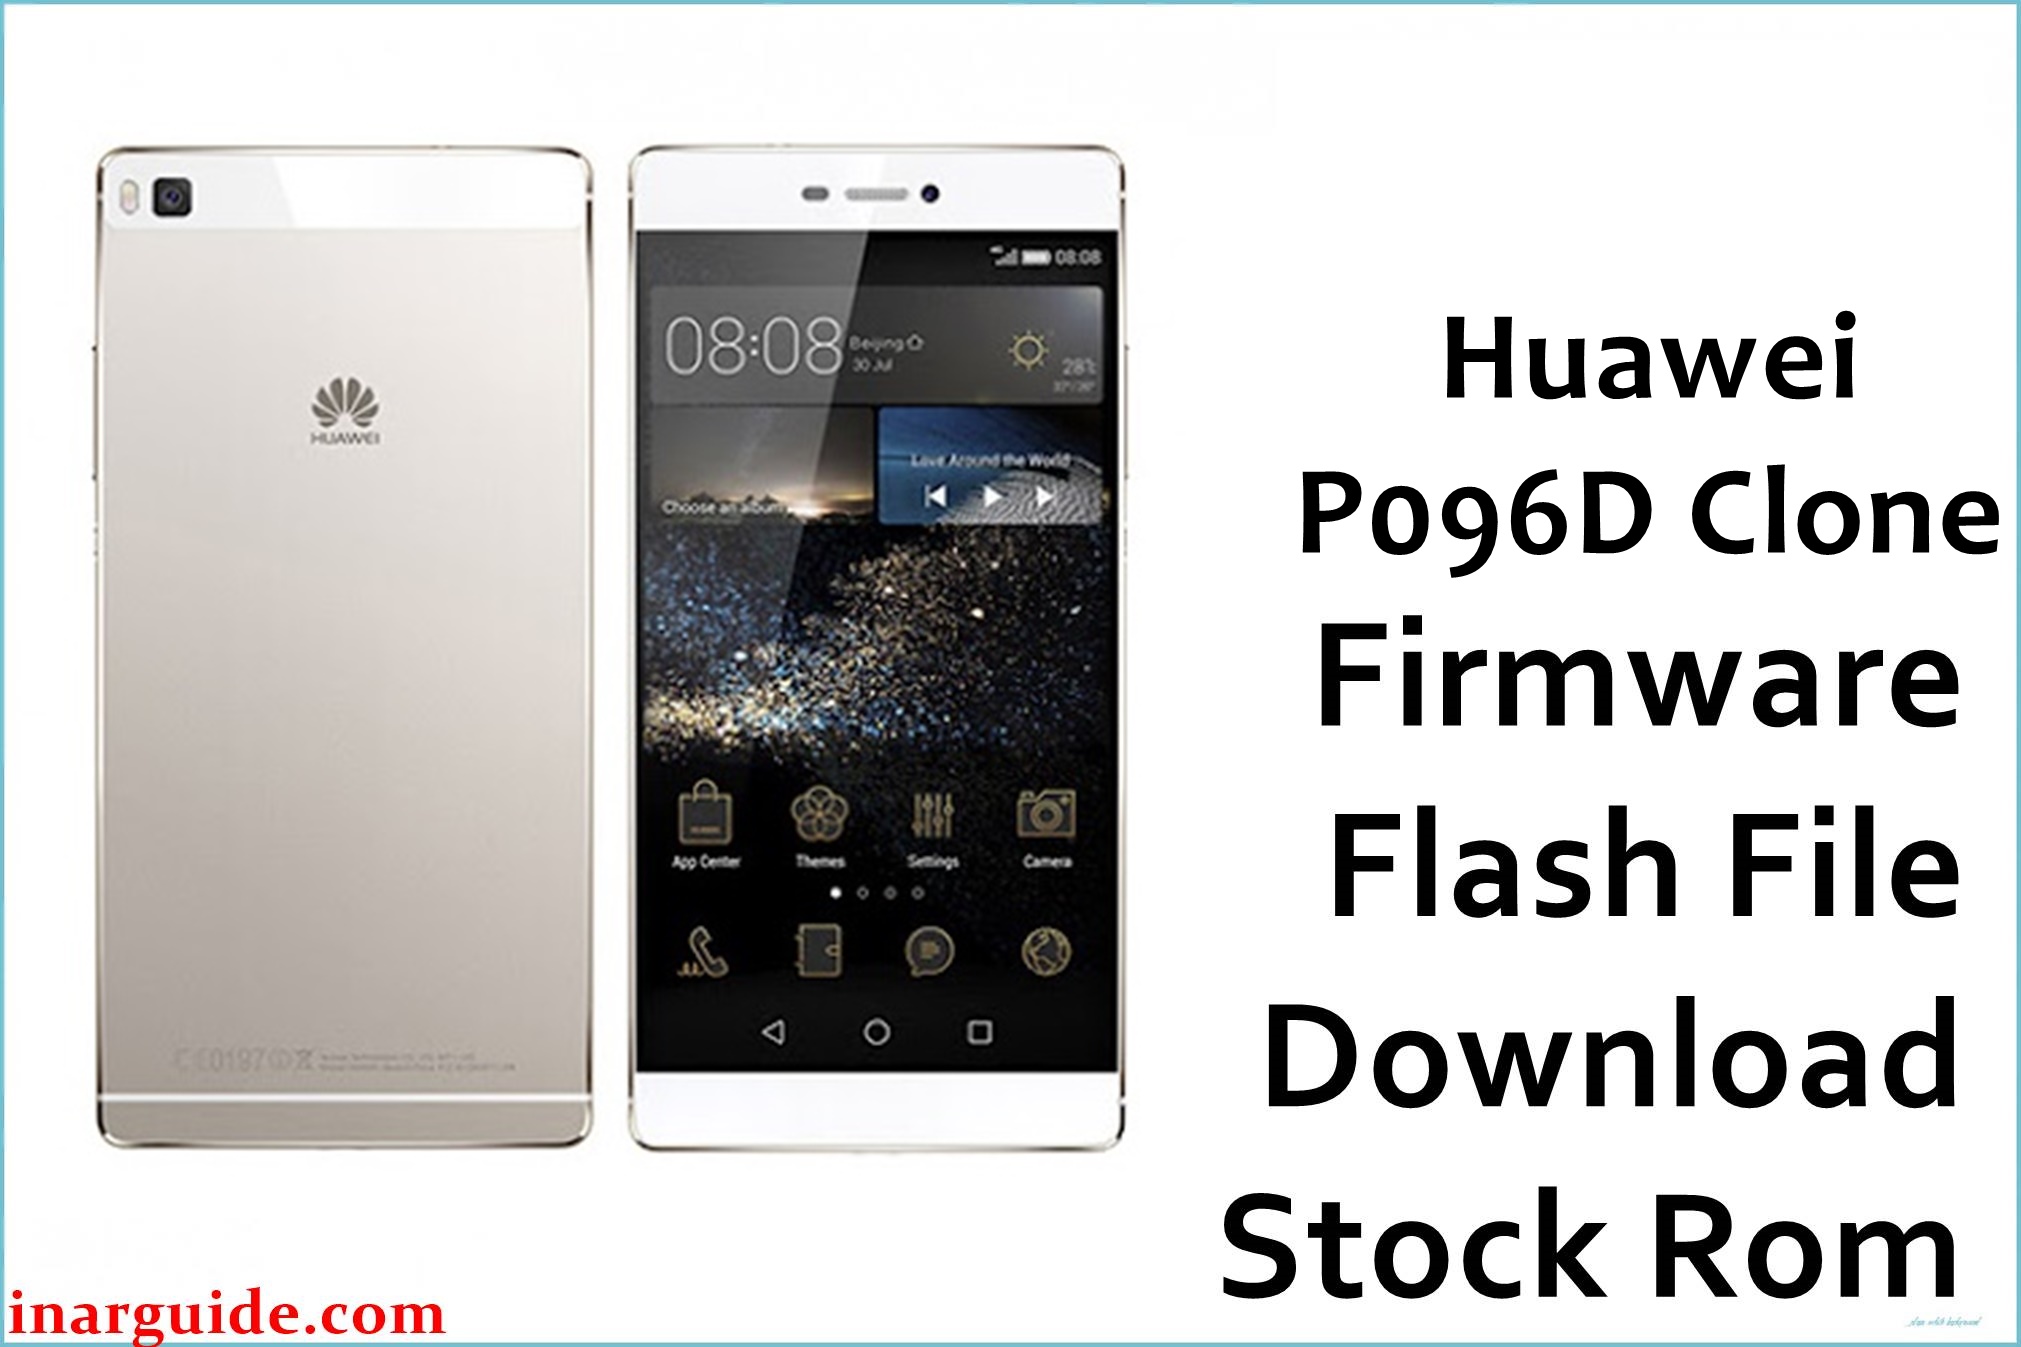 Huawei P096D Clone